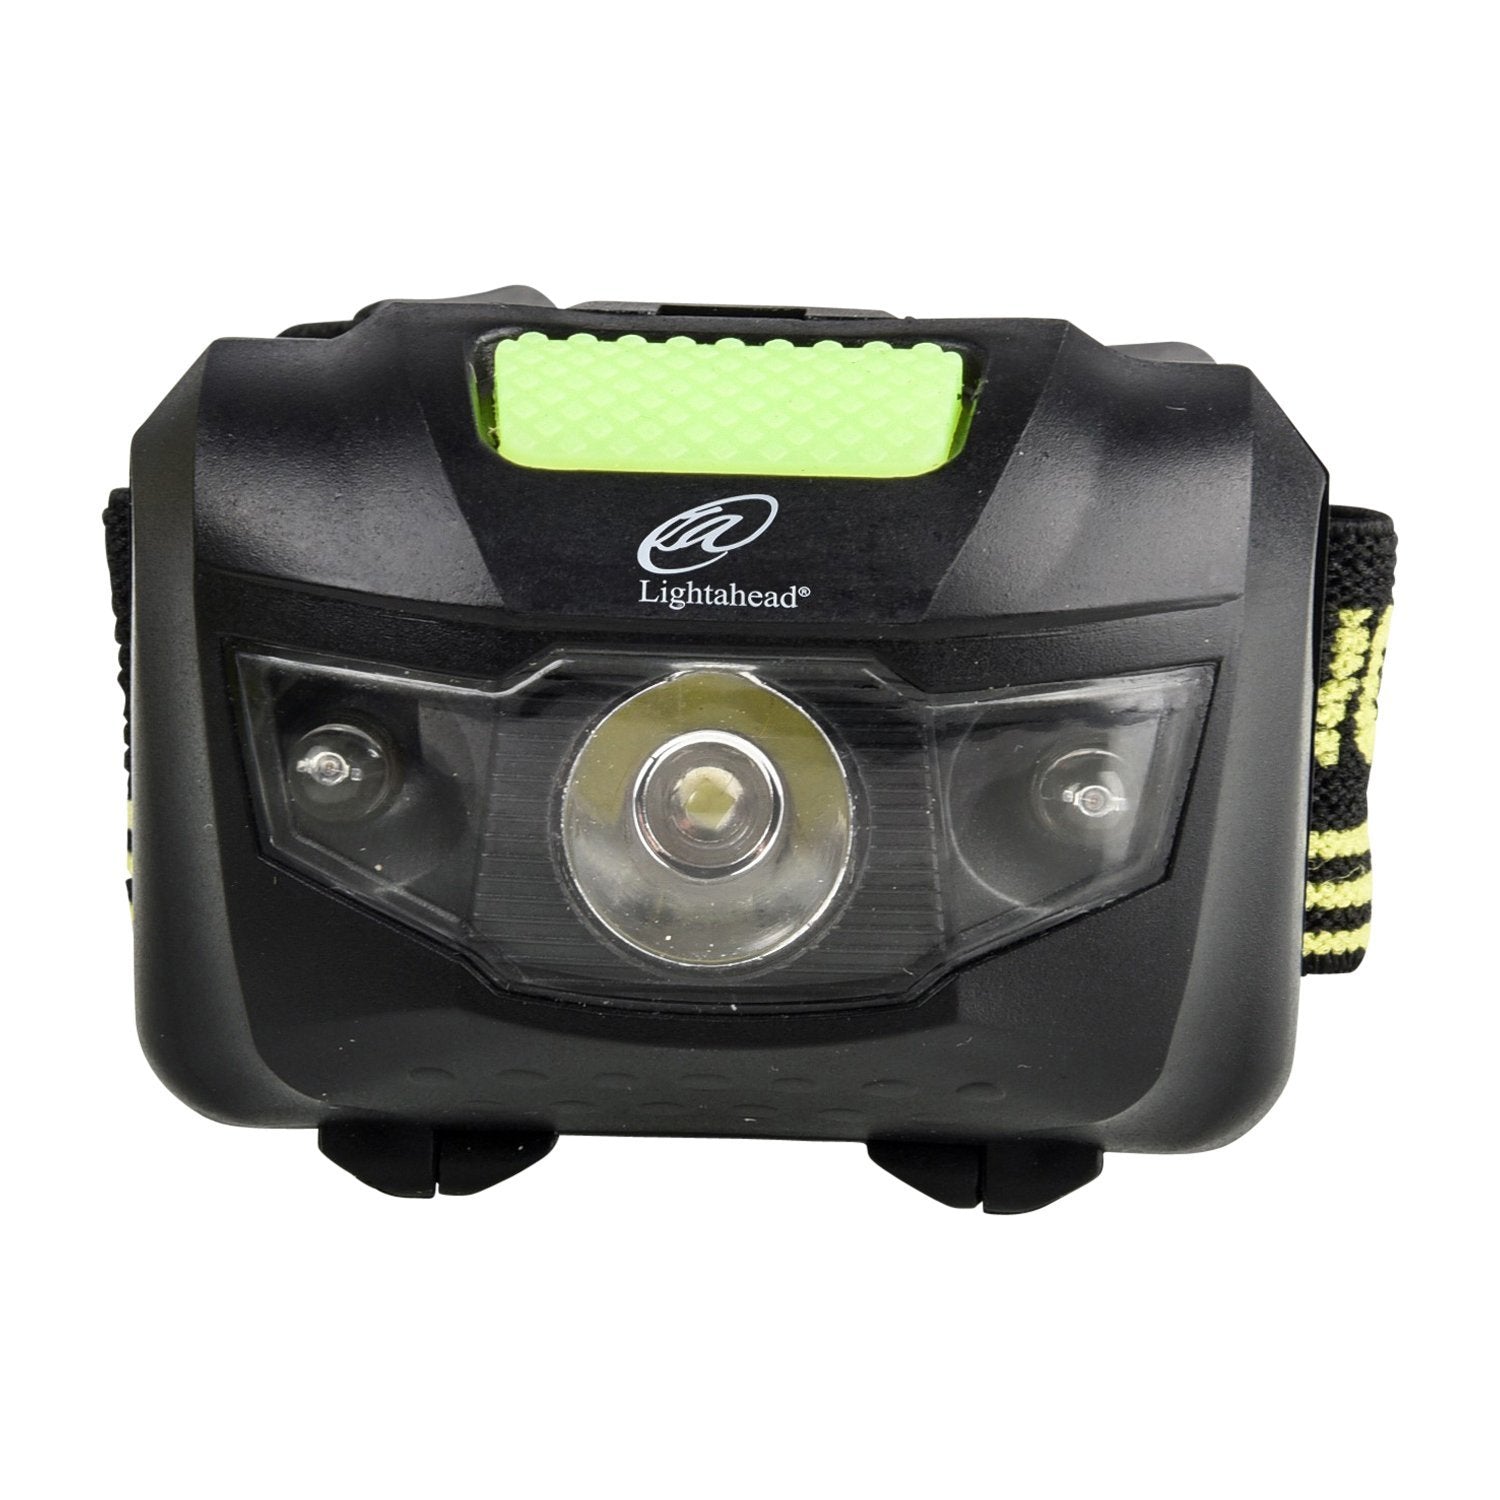 Lightahead LED Bright Headlamp Lightweight Waterproof, Hands free, Adjustable 200 Lumen Flashlight